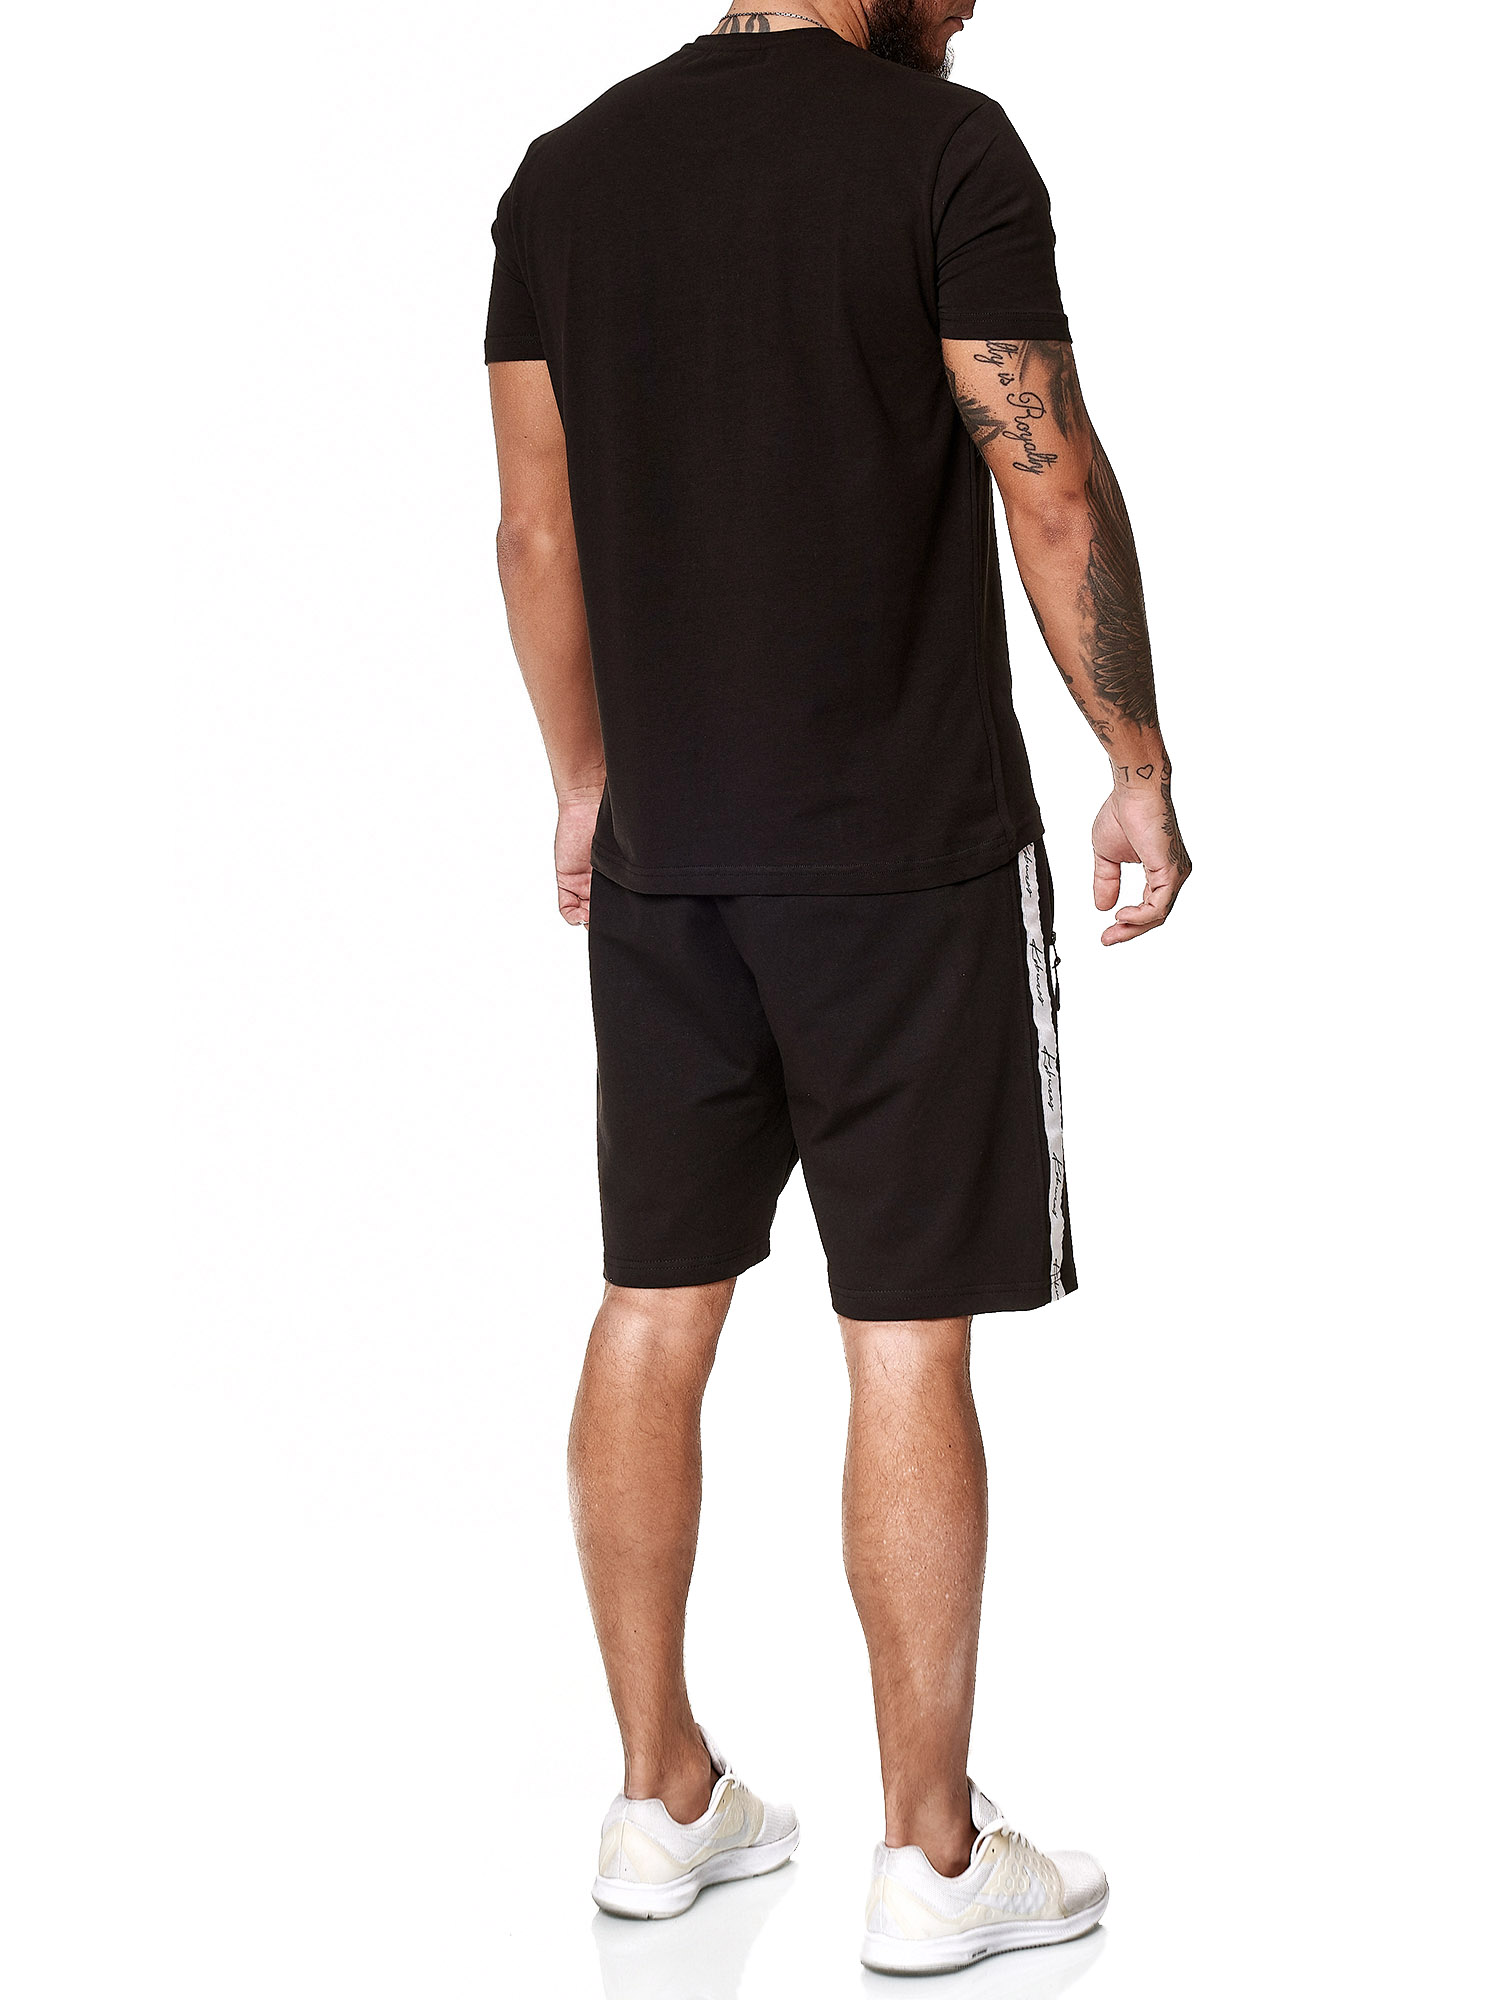 Jogginganzug Herren Kurzarm Rundhals T-Shirt Shorts Bermudas TShirt kurze Hose 